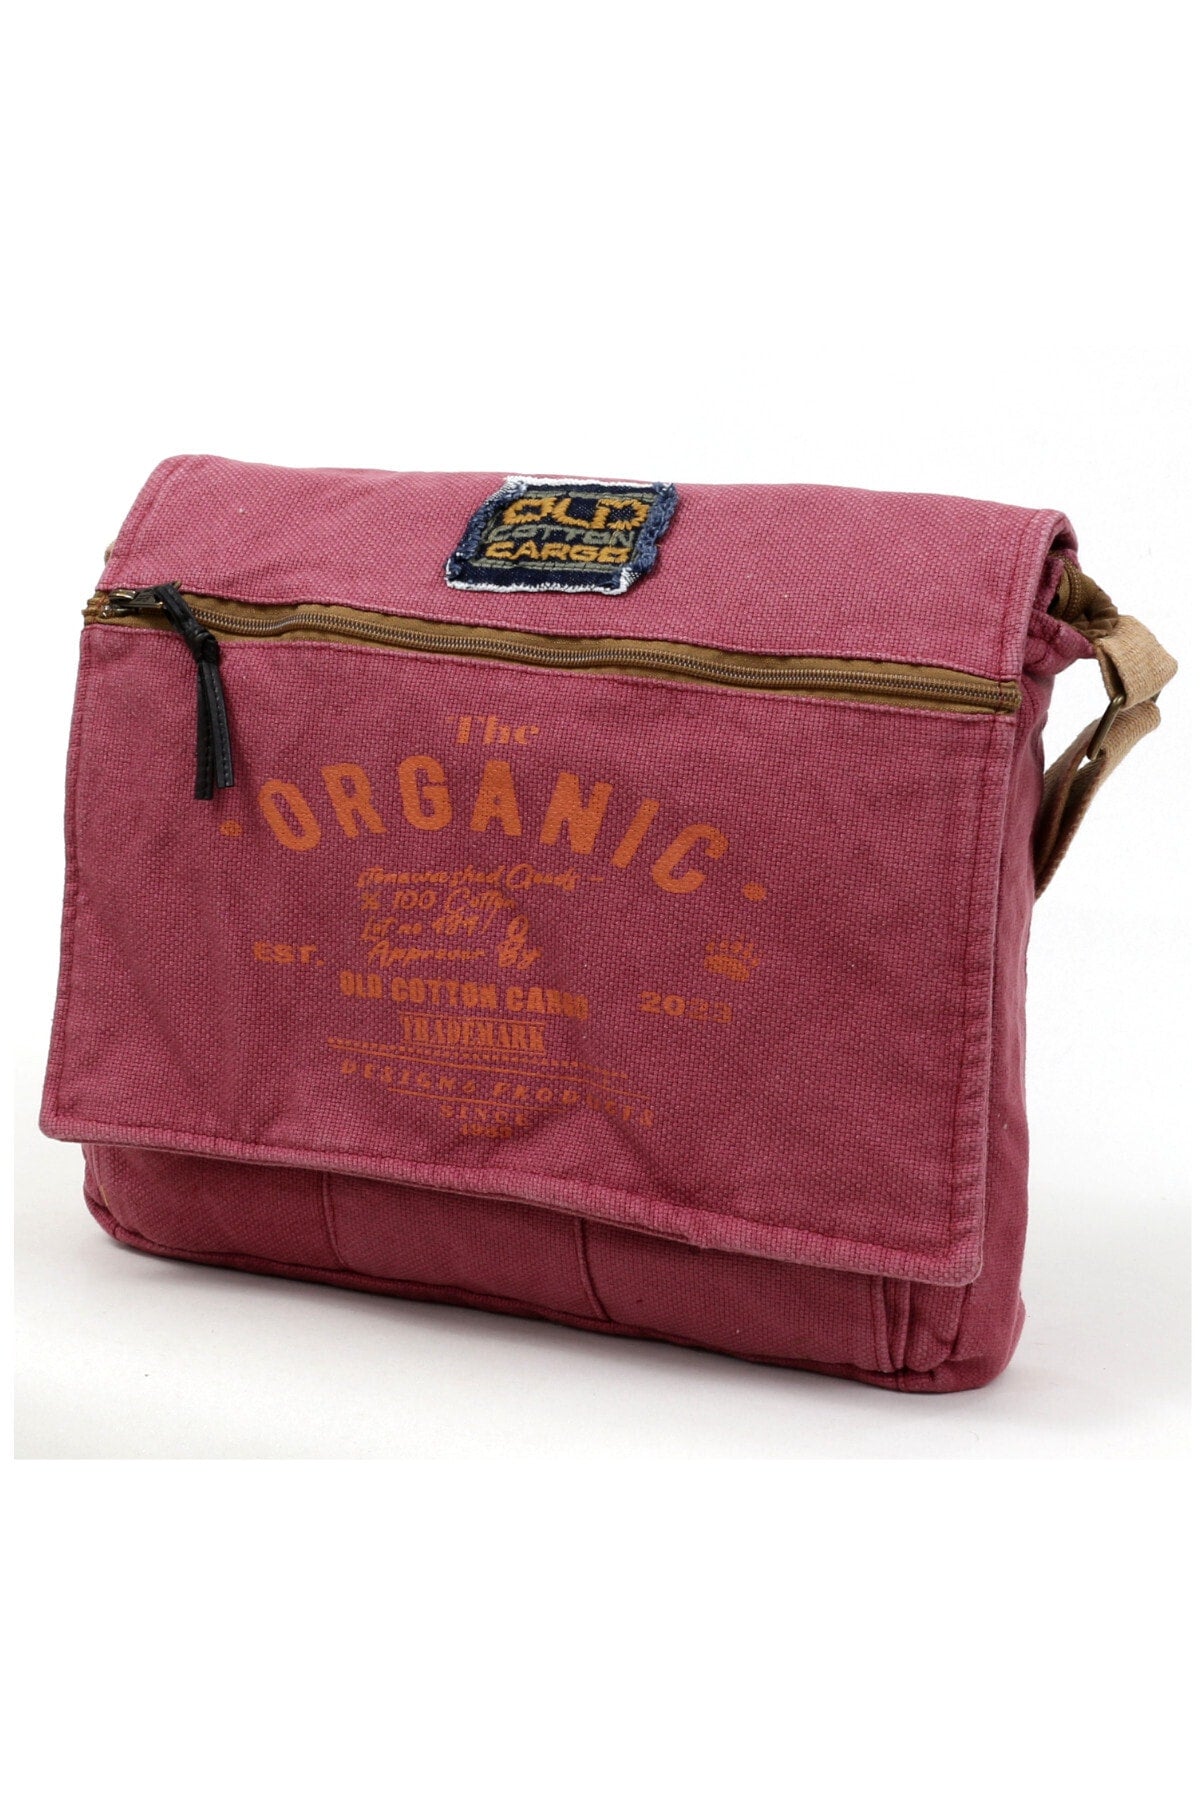 Old Cotton Pink Loose Canvas Shoulder Messenger Laptop School Travel Vintage Cotton Fabric Bag